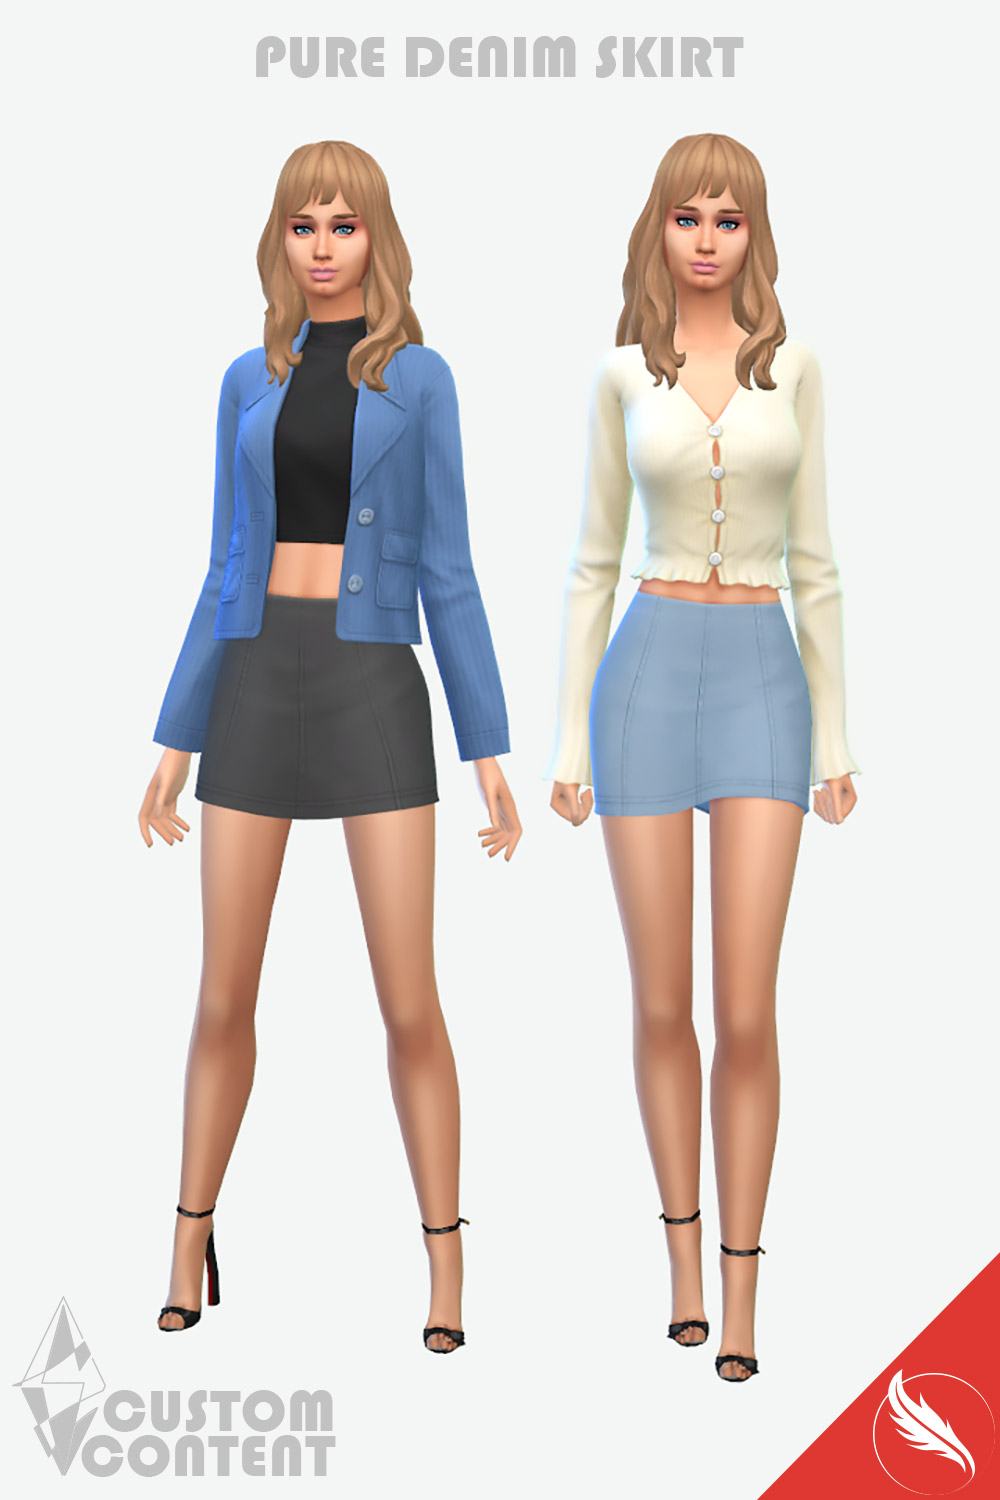 The Sims 4 Mini Skirt CC